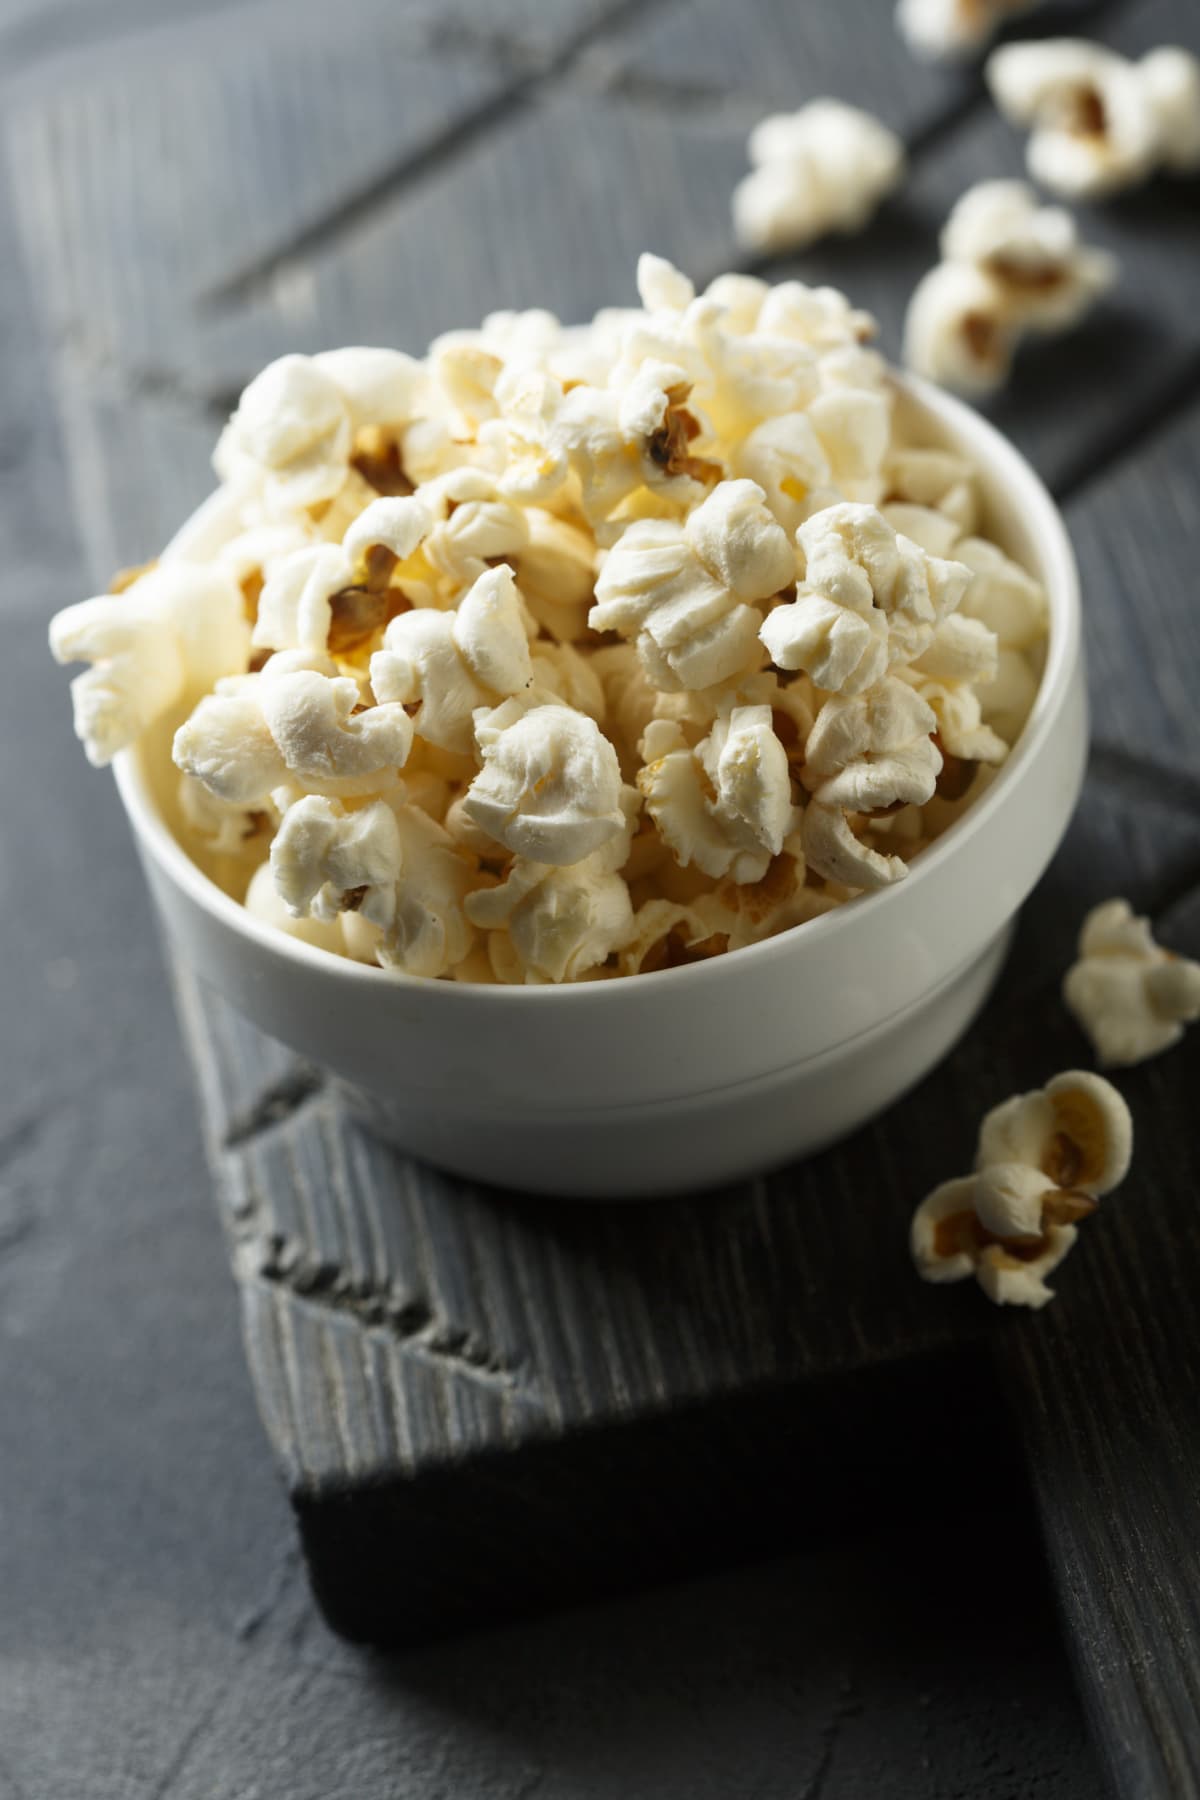 Homemade popcorn in white bowl on dark tray on dark surface